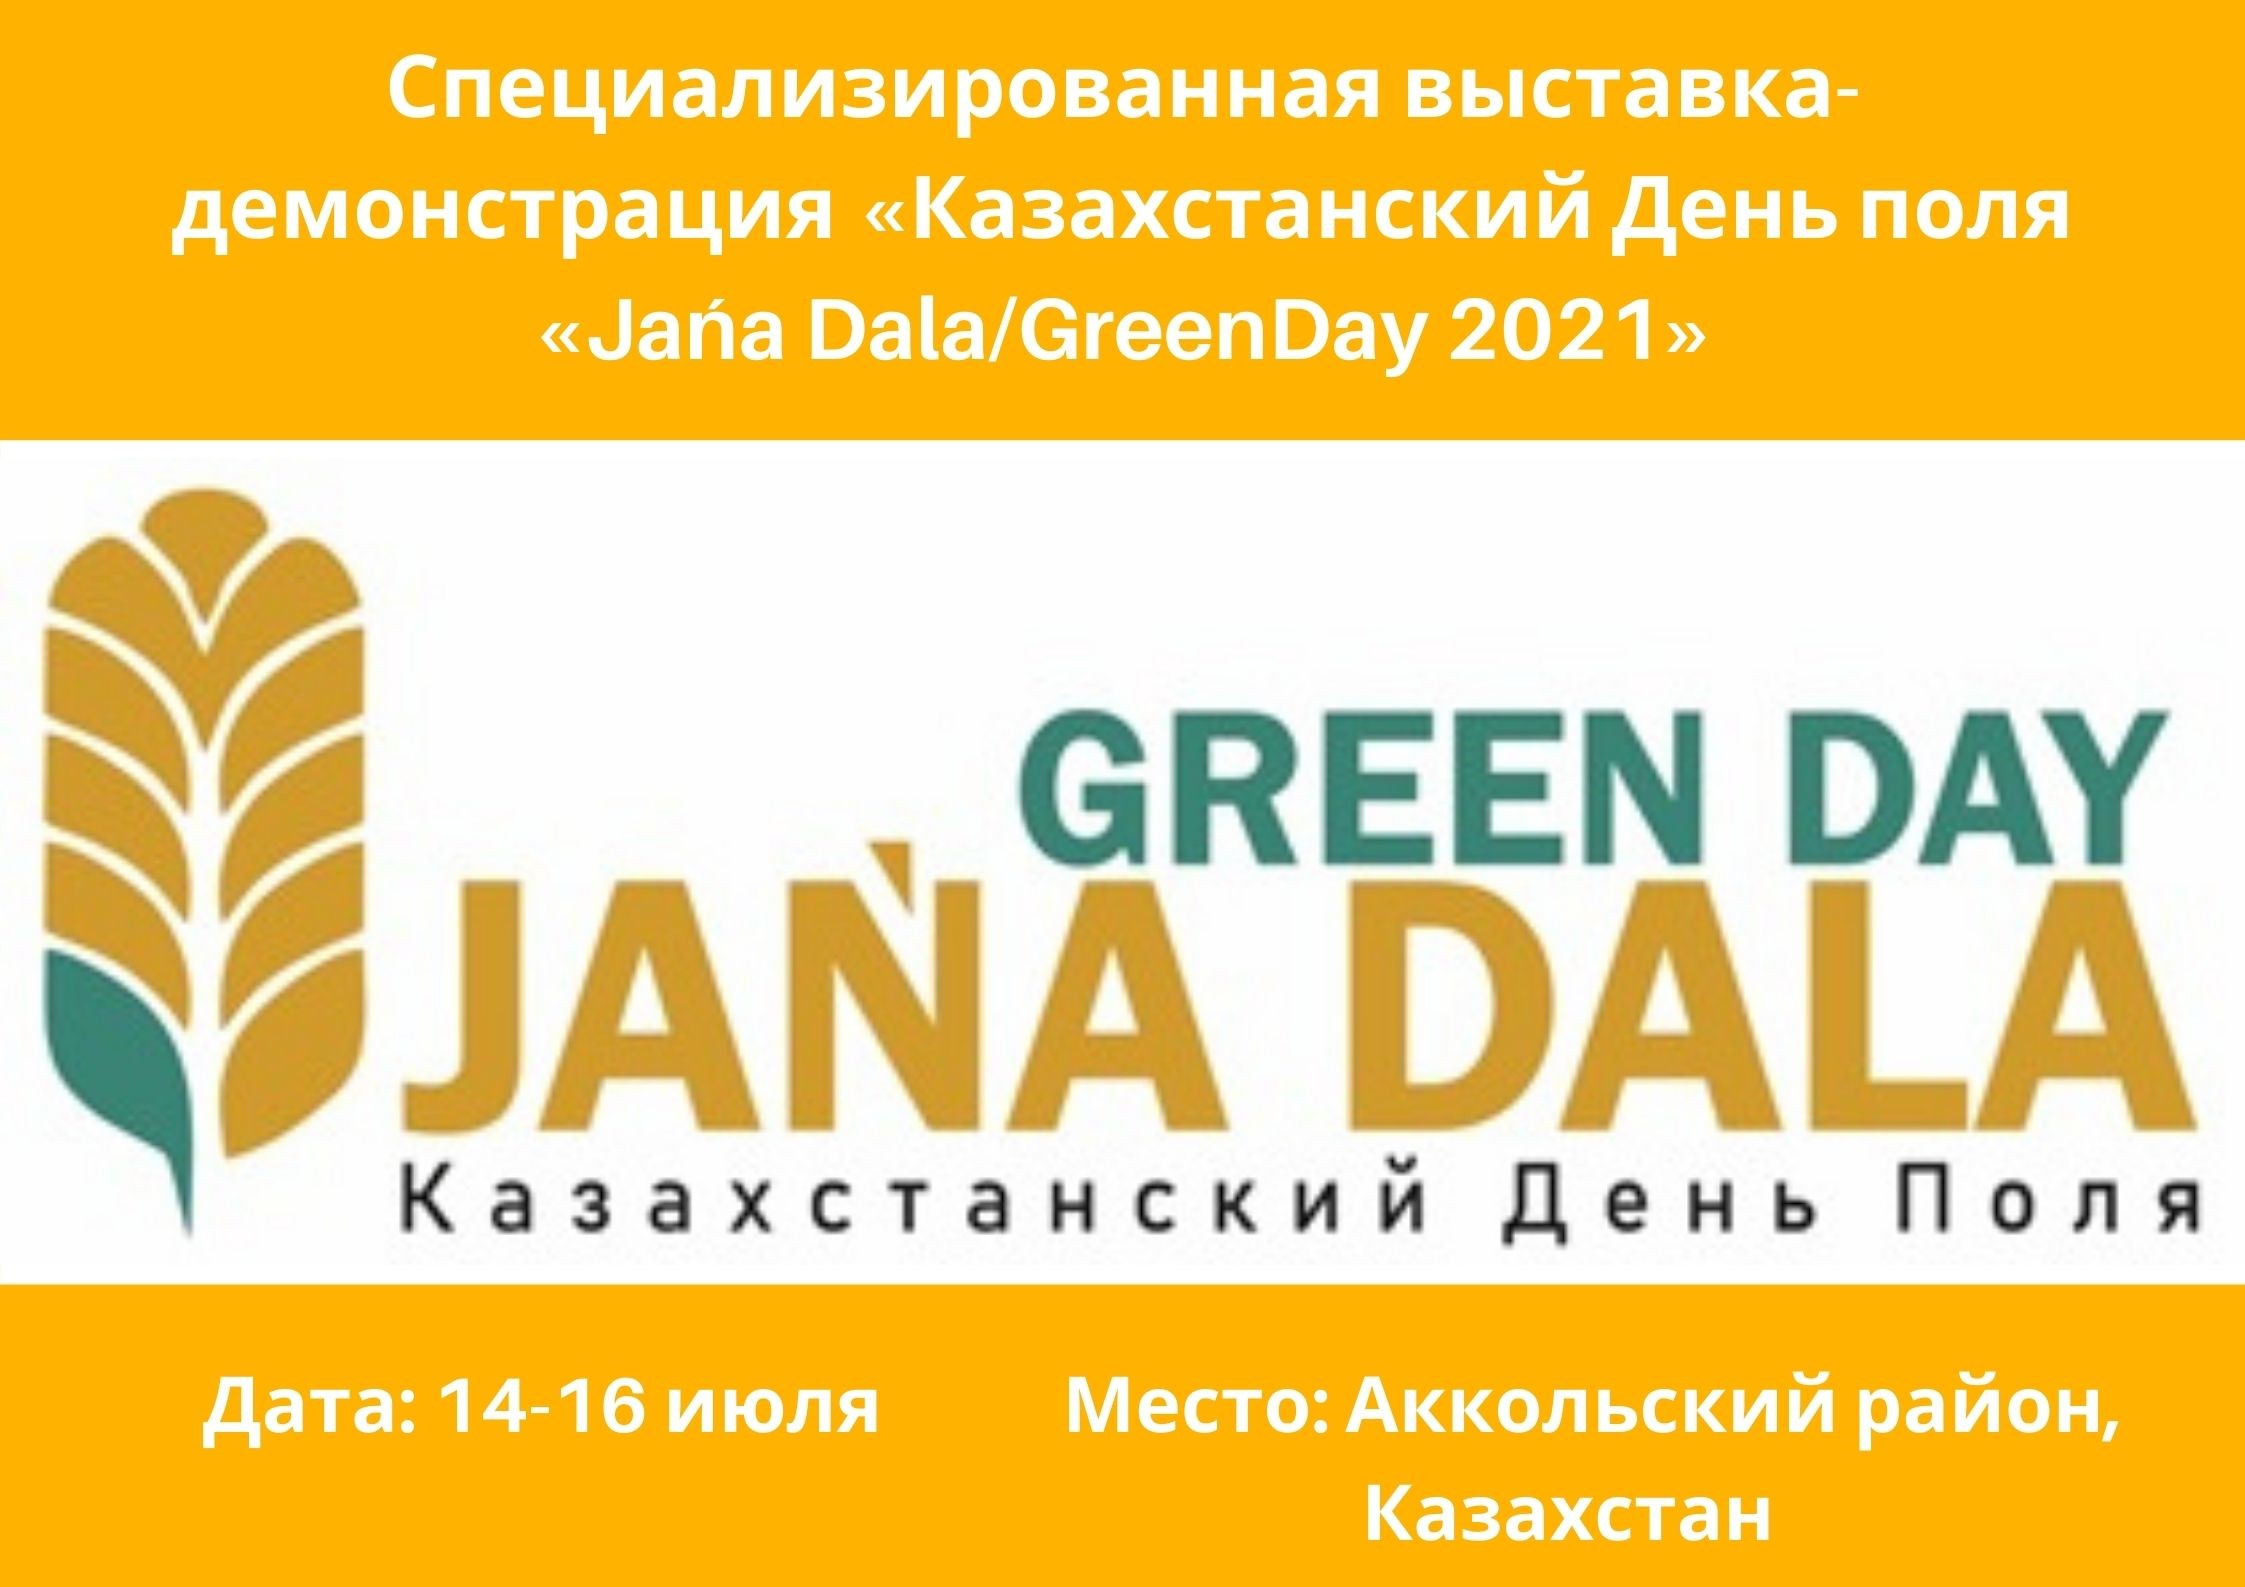 «Jańa Dala / GreenDay 2021» қазақстандық дала күні 